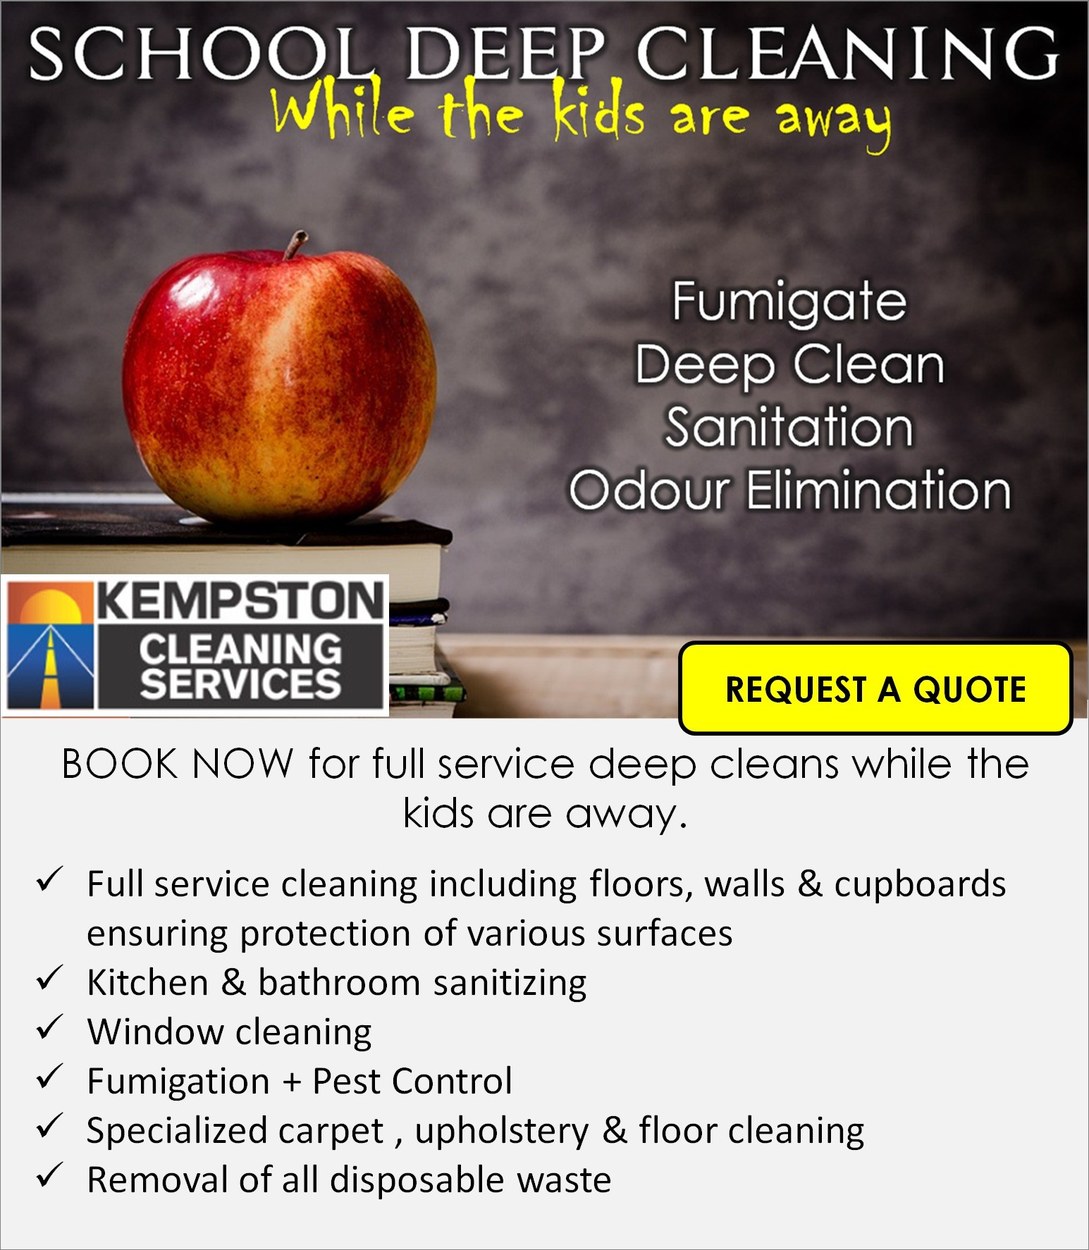 Kempston Cleaning